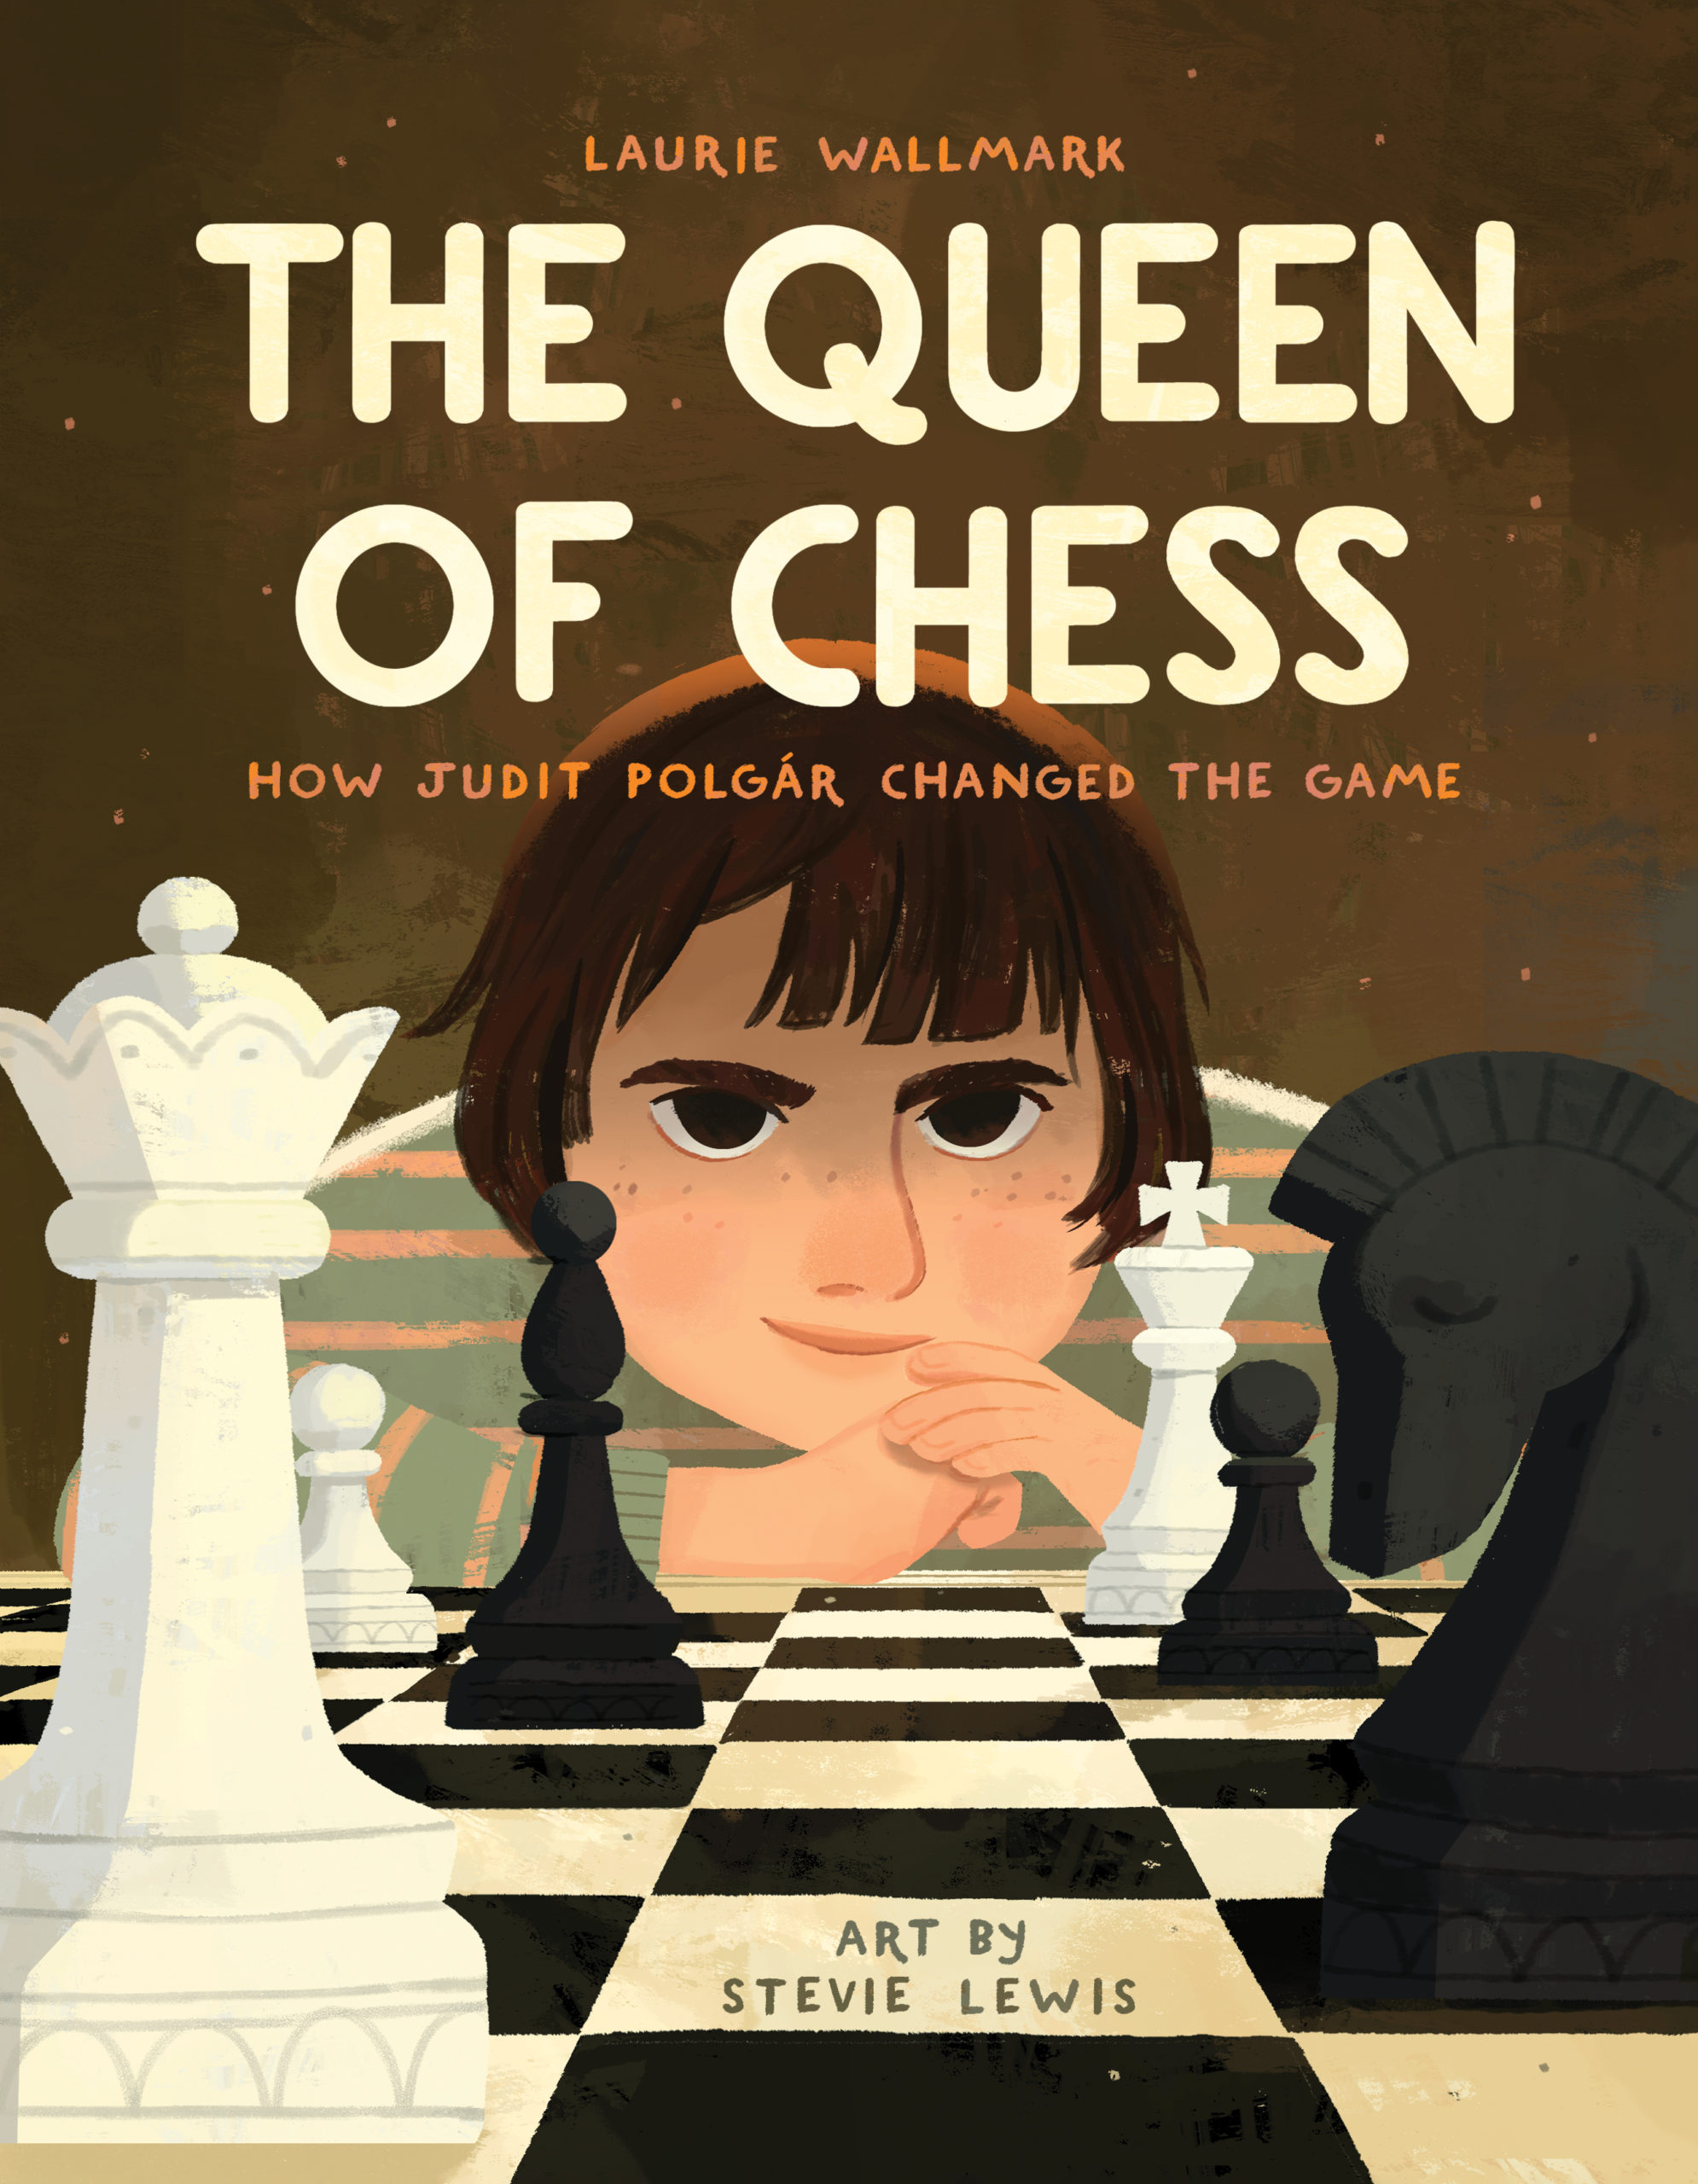 The Chess Greats of The World - Judit Polgar PDF, PDF, Chess